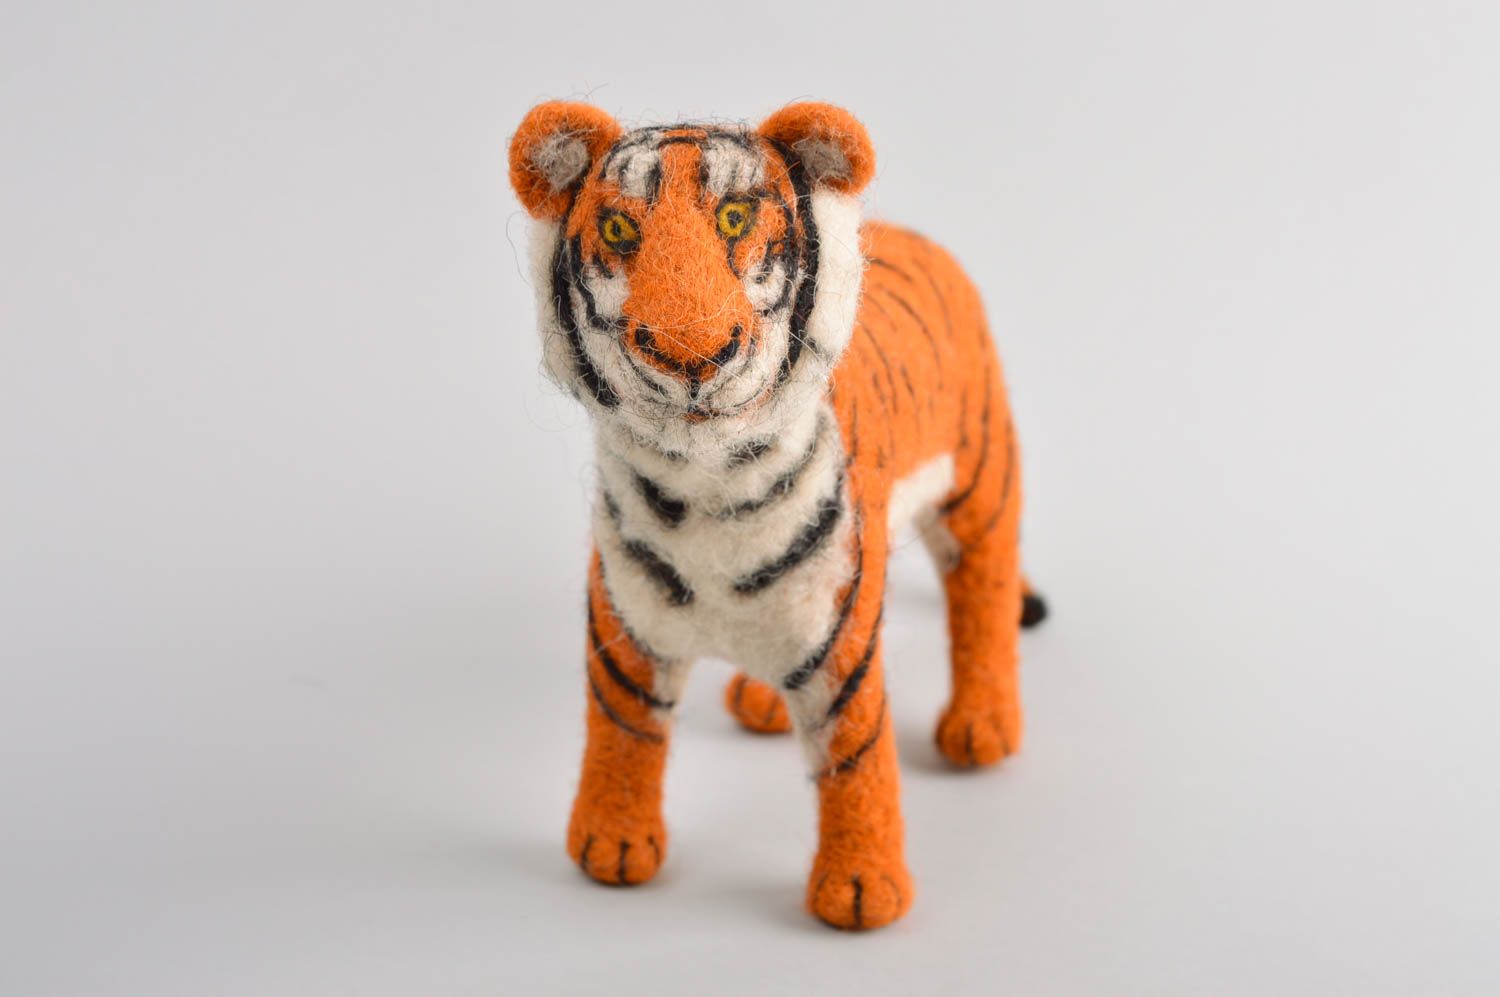 Handmade toy designer toy woolen animal toy for kids nursery decor gift ideas photo 5